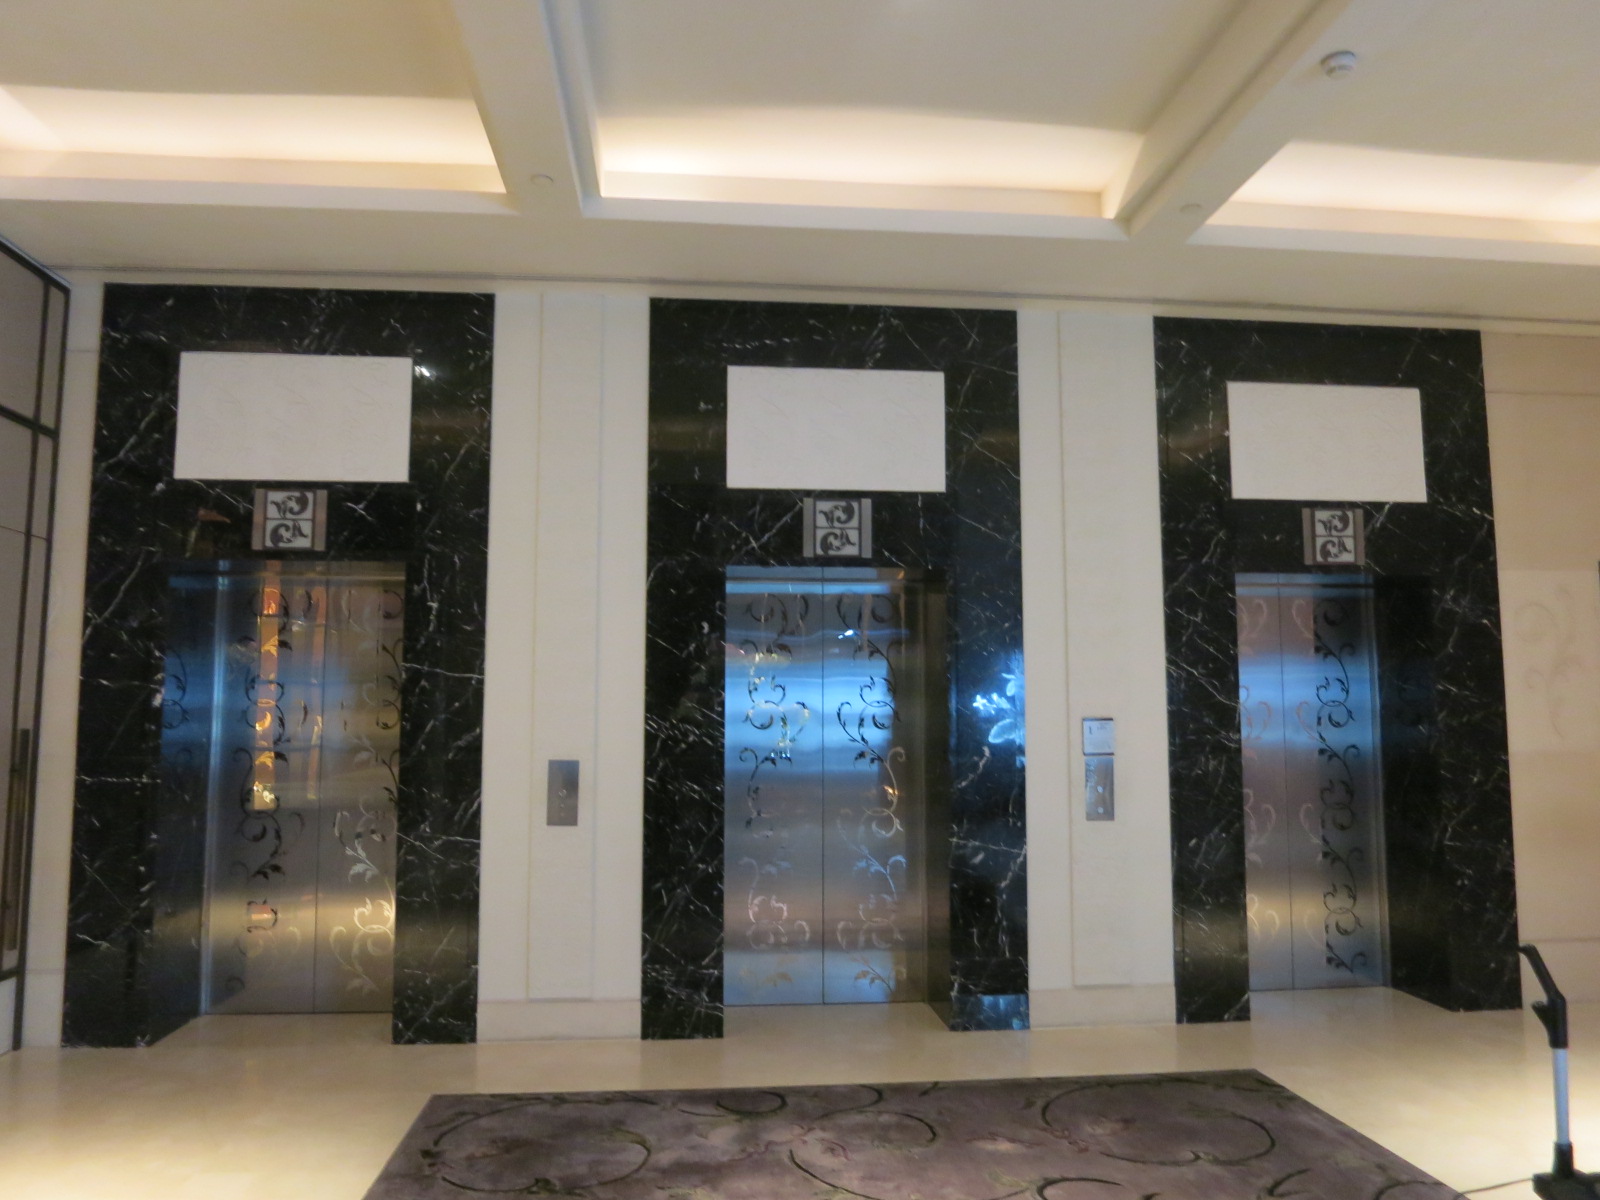 St. Regis Bangkok hotel elevators